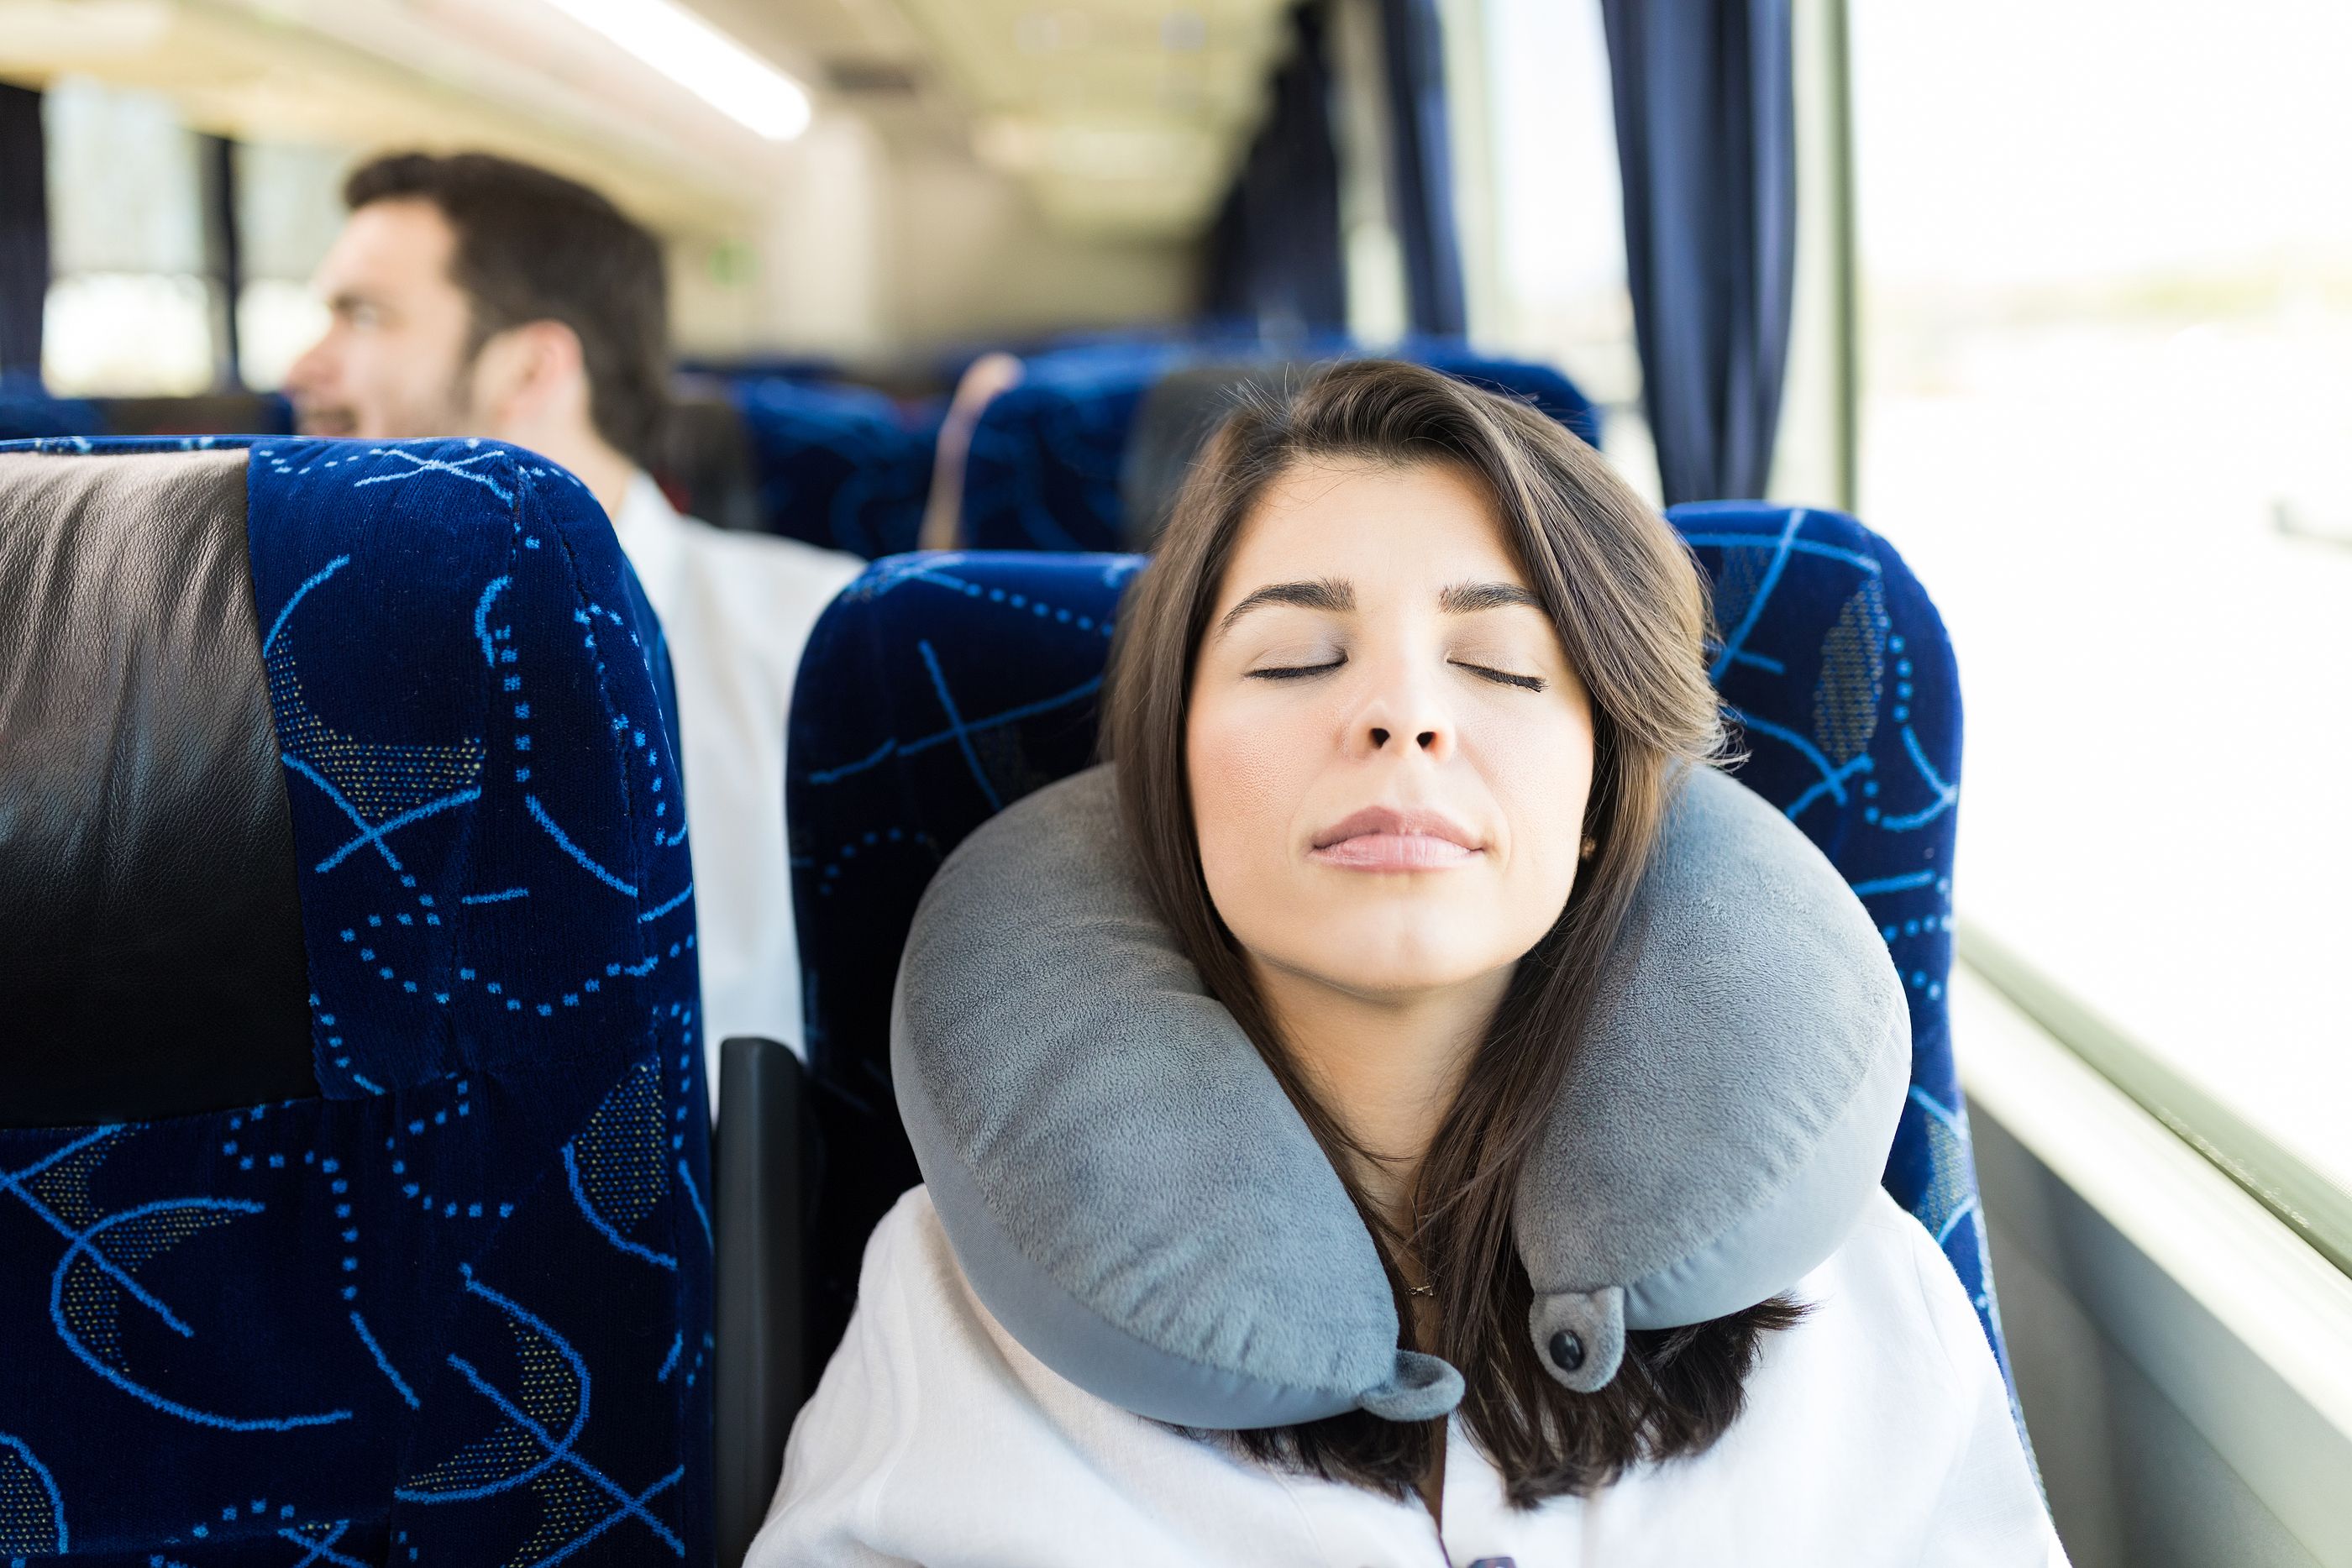 Терпящий пассажиры дремлют. Пассажиры дремлют. Автобус картинка. Jet lag. Fall asleep on a Bus.